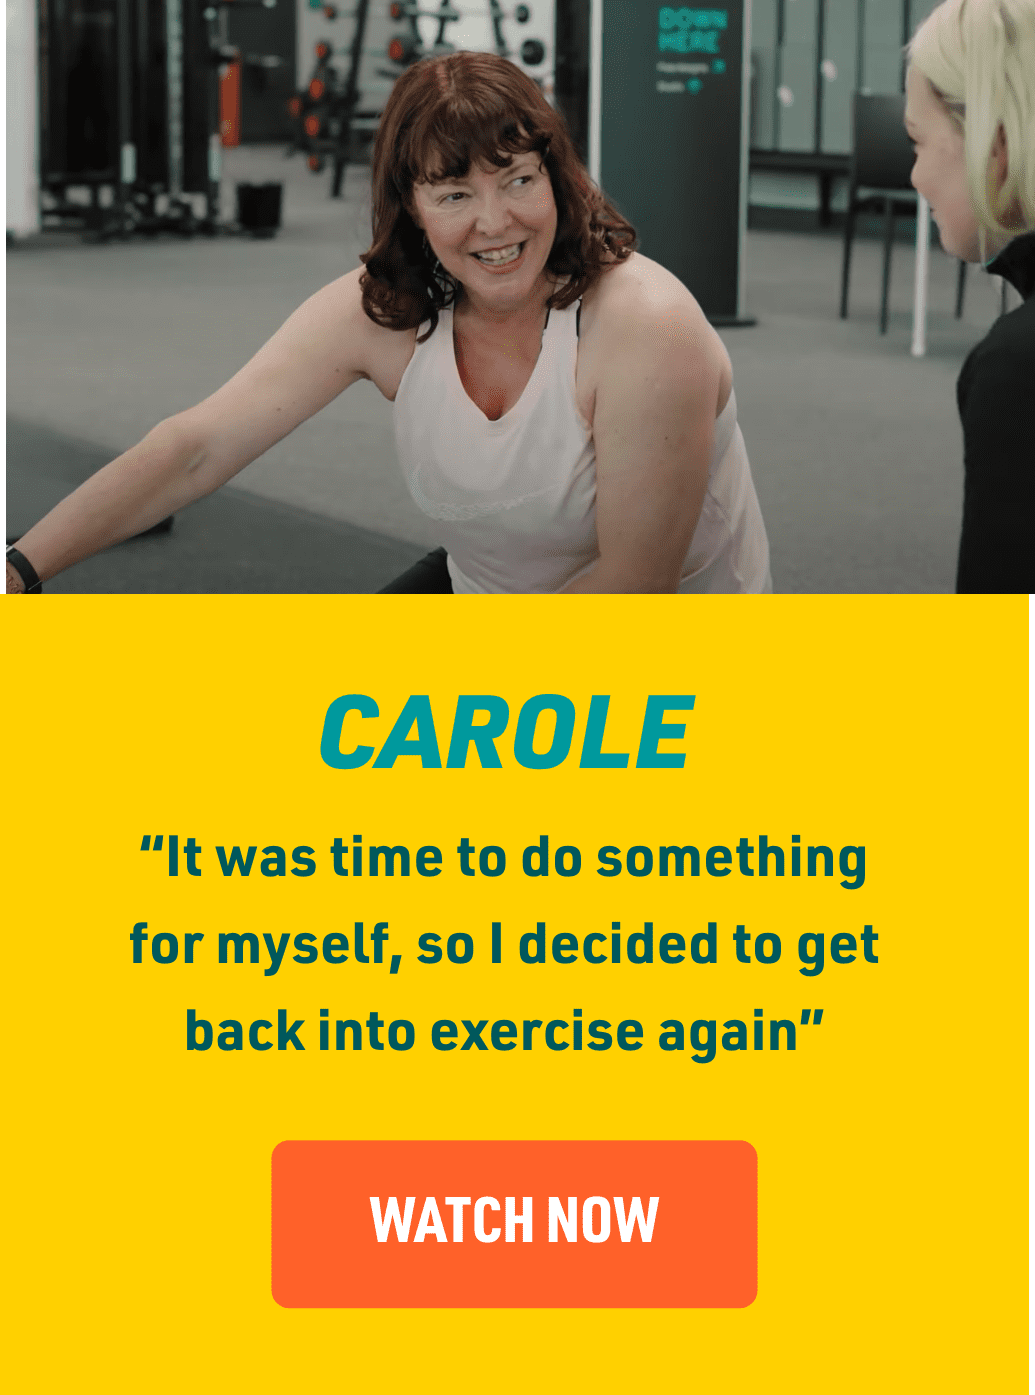 Carole's story